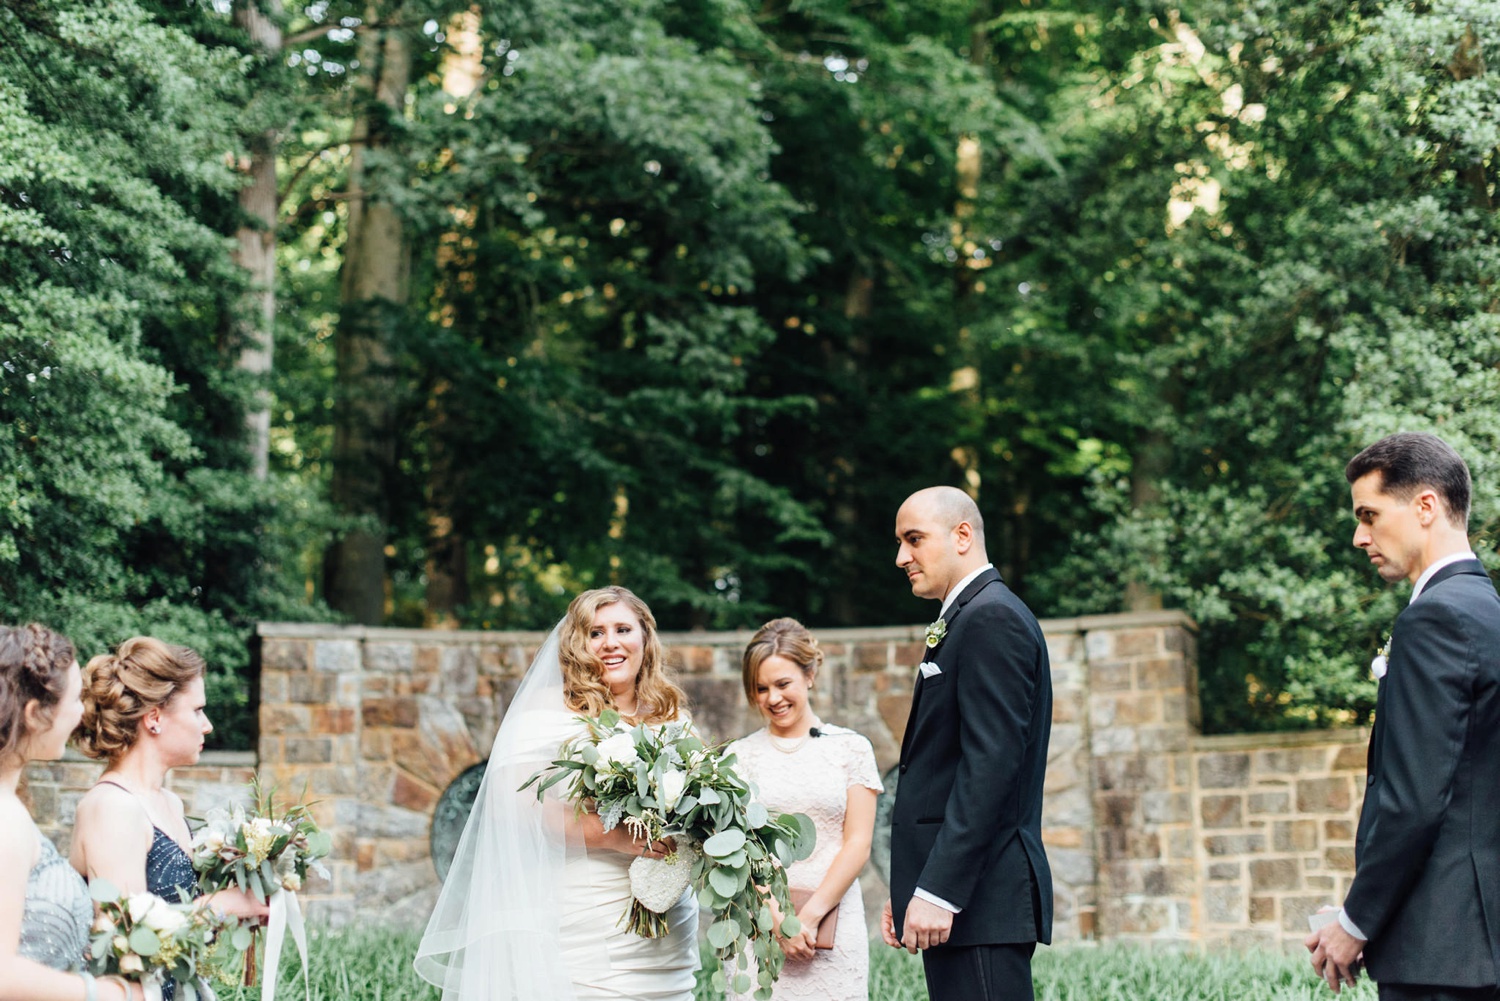 Alex + Robert - Winterthur Wedding - Delaware Wedding Photographer - Alison Dunn Photography photo